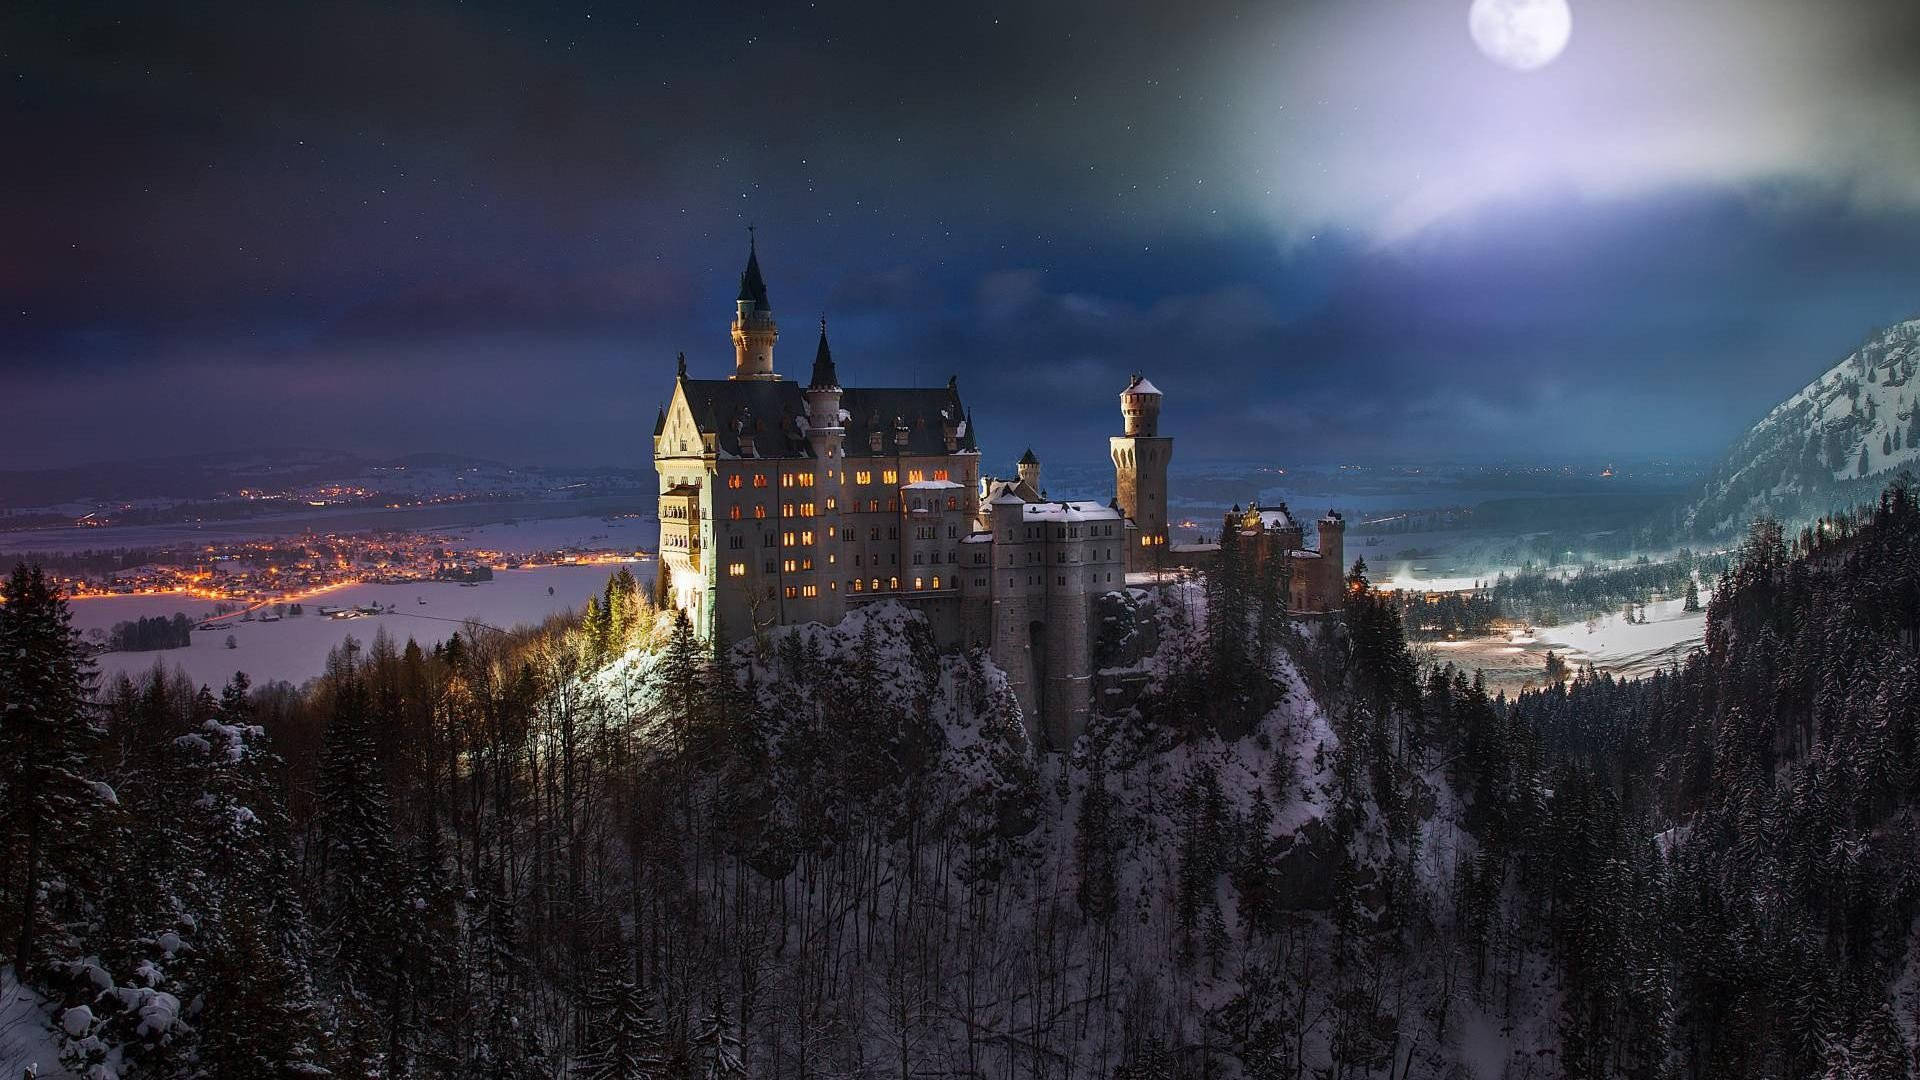 Neuschwanstein Castle Moonlit Night Wallpaper